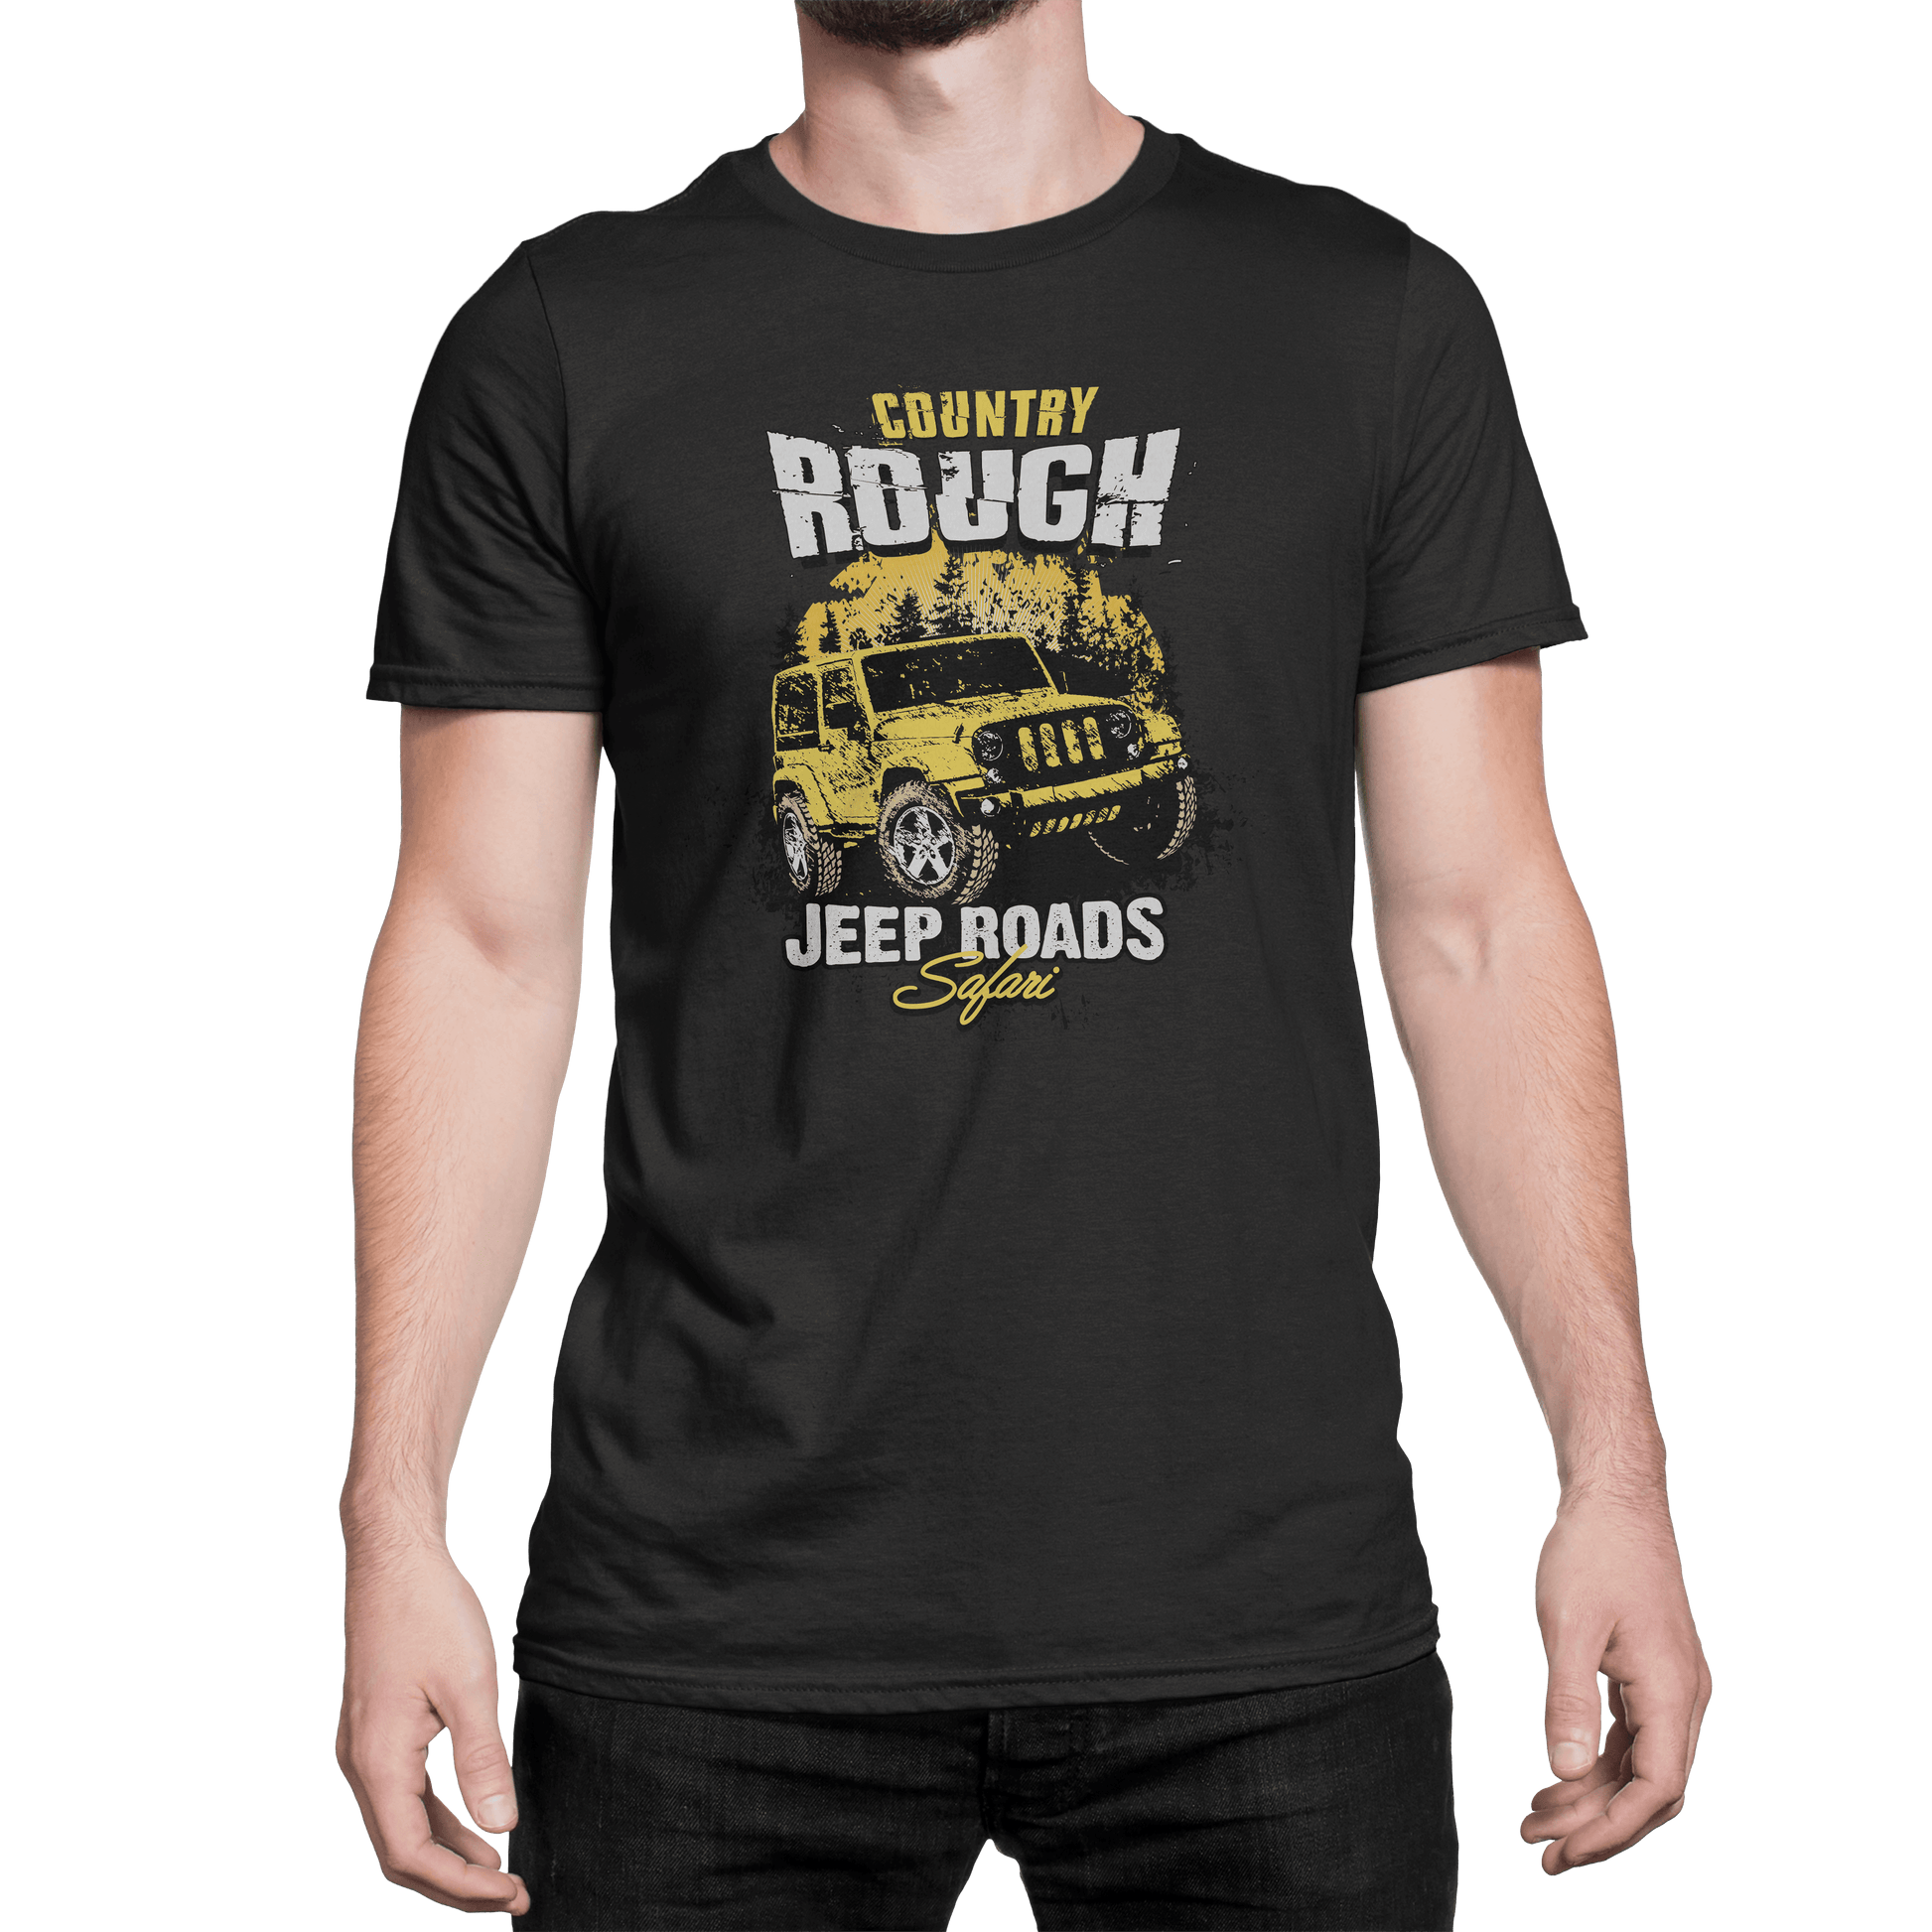 Country Rough - Men's T-shirt T-shirt by DIRT & GLORY